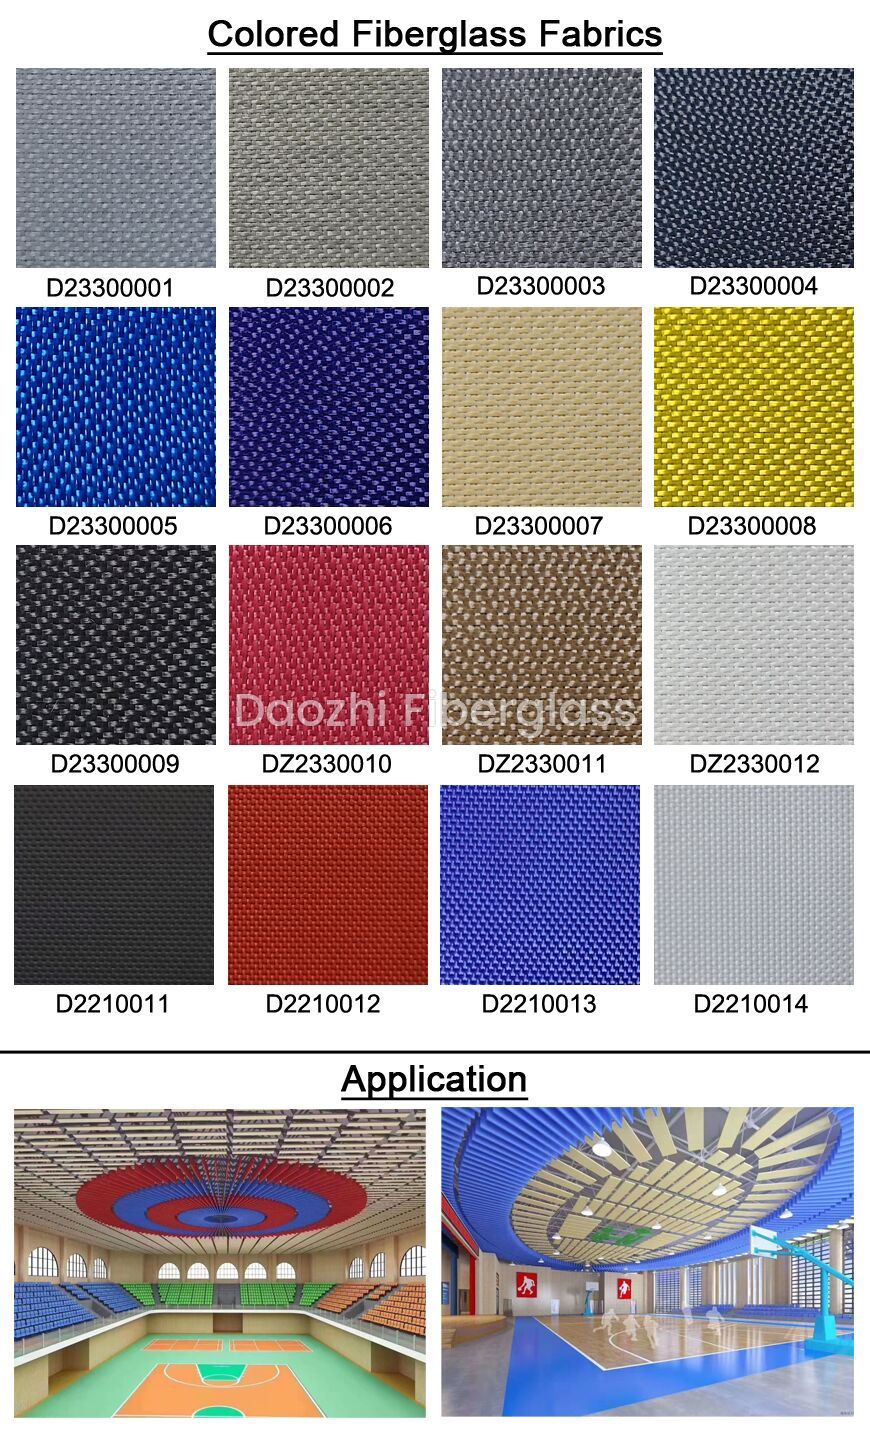 Colored Fiberglass Fabric